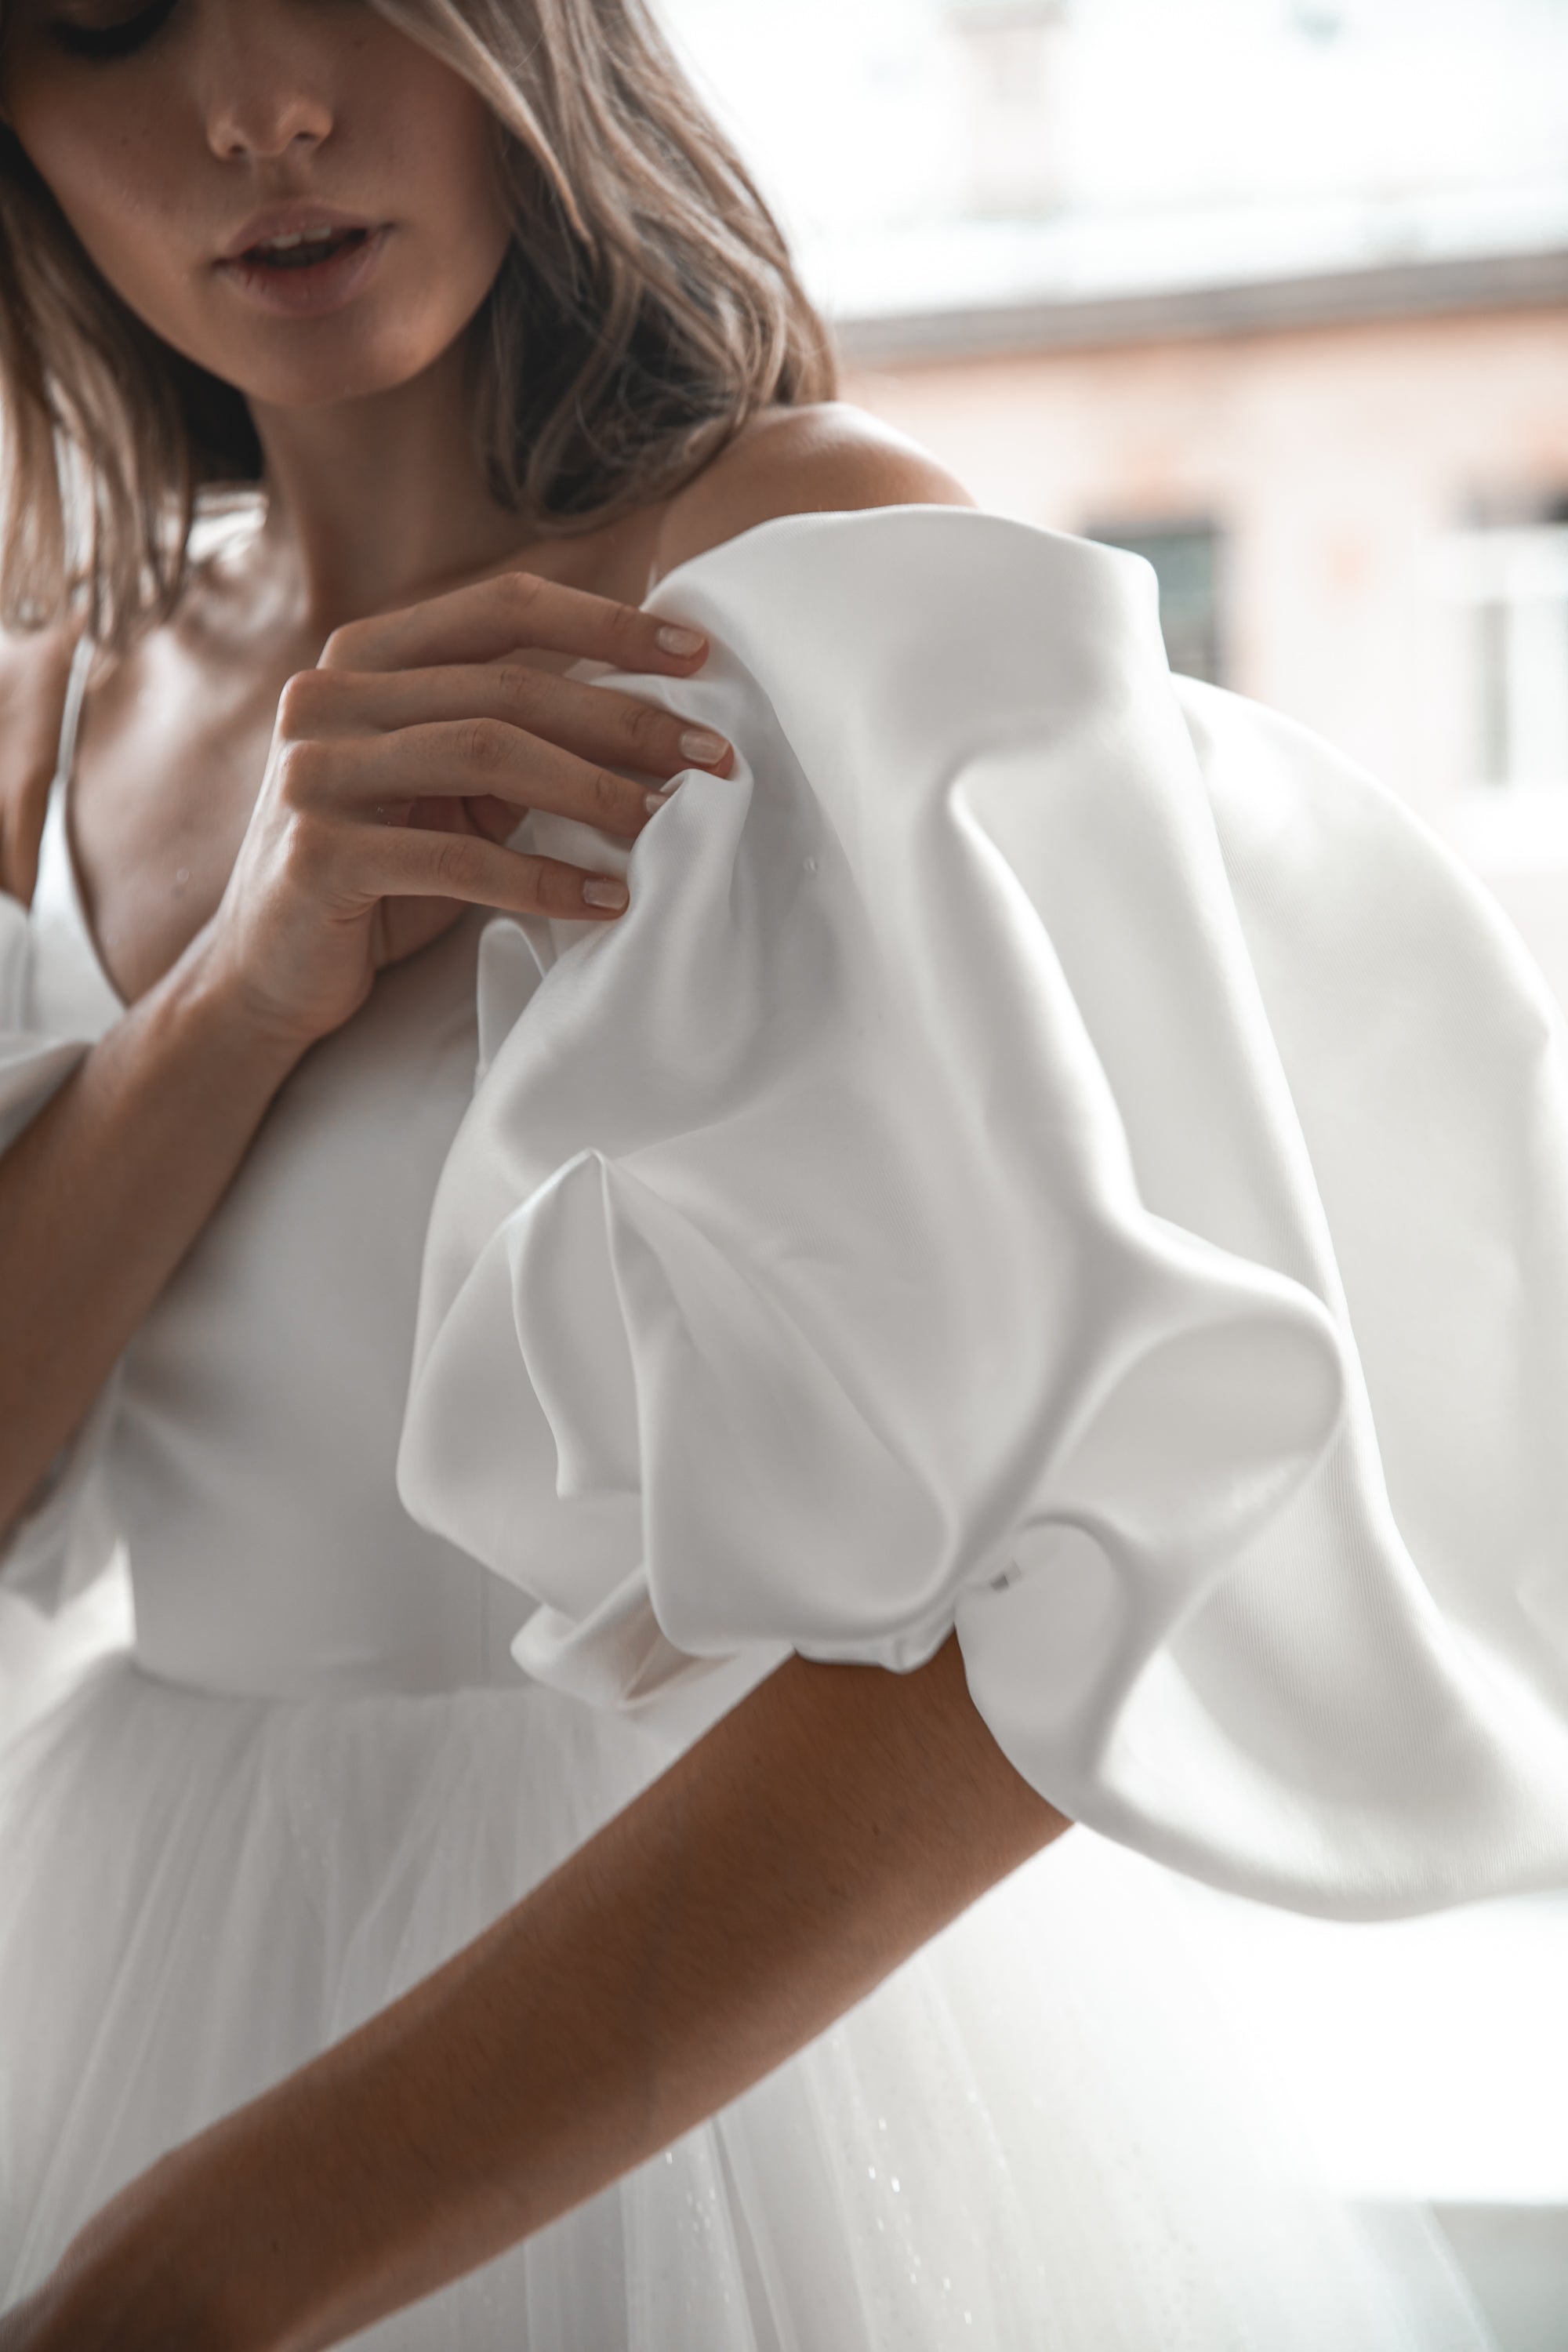 Long-Sleeve Wedding Dresses: Timeless & Elegant Designs | Pronovias